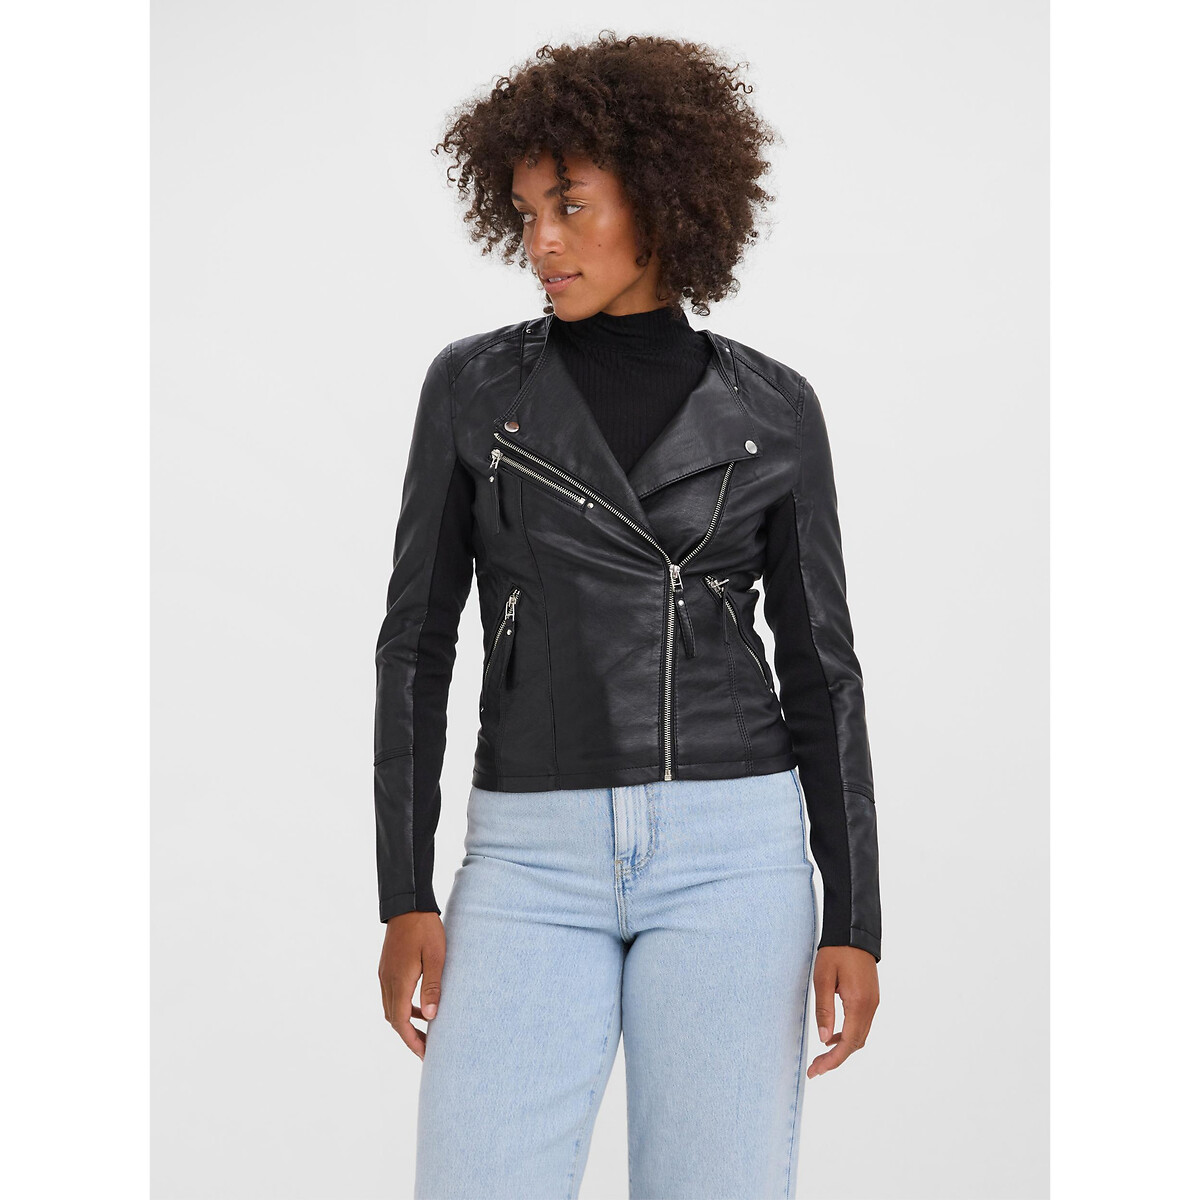 forudsætning peber Industriel Faux leather jacket, black, Vero Moda | La Redoute